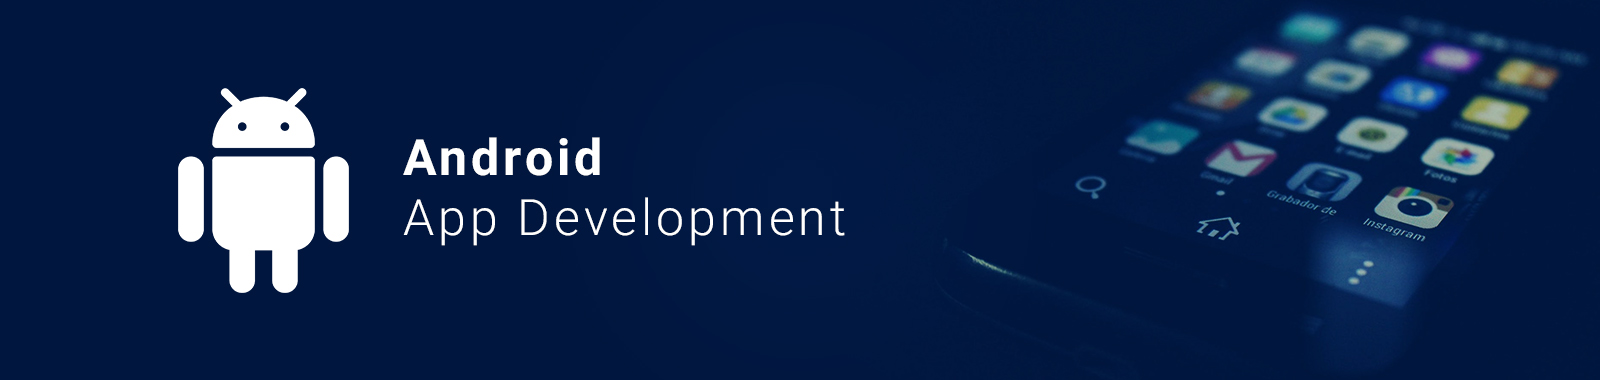 Android App Development Portfolio